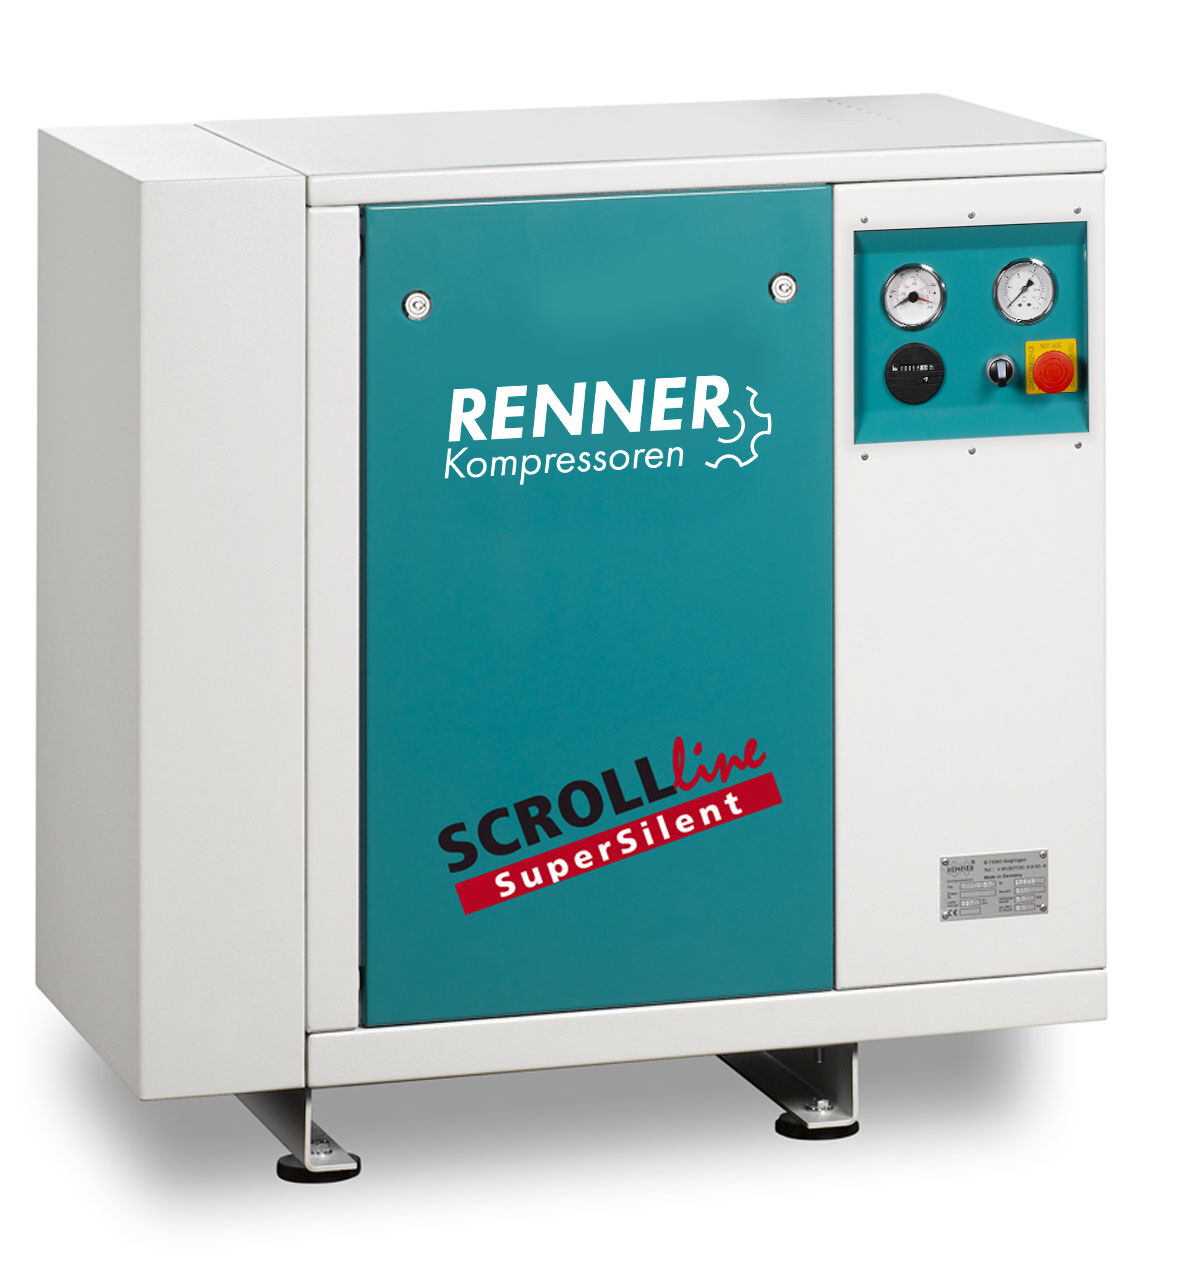 RENNER-Kompressor SL-S 5,5 - SuperSilent ölfreier Scrollkompressor